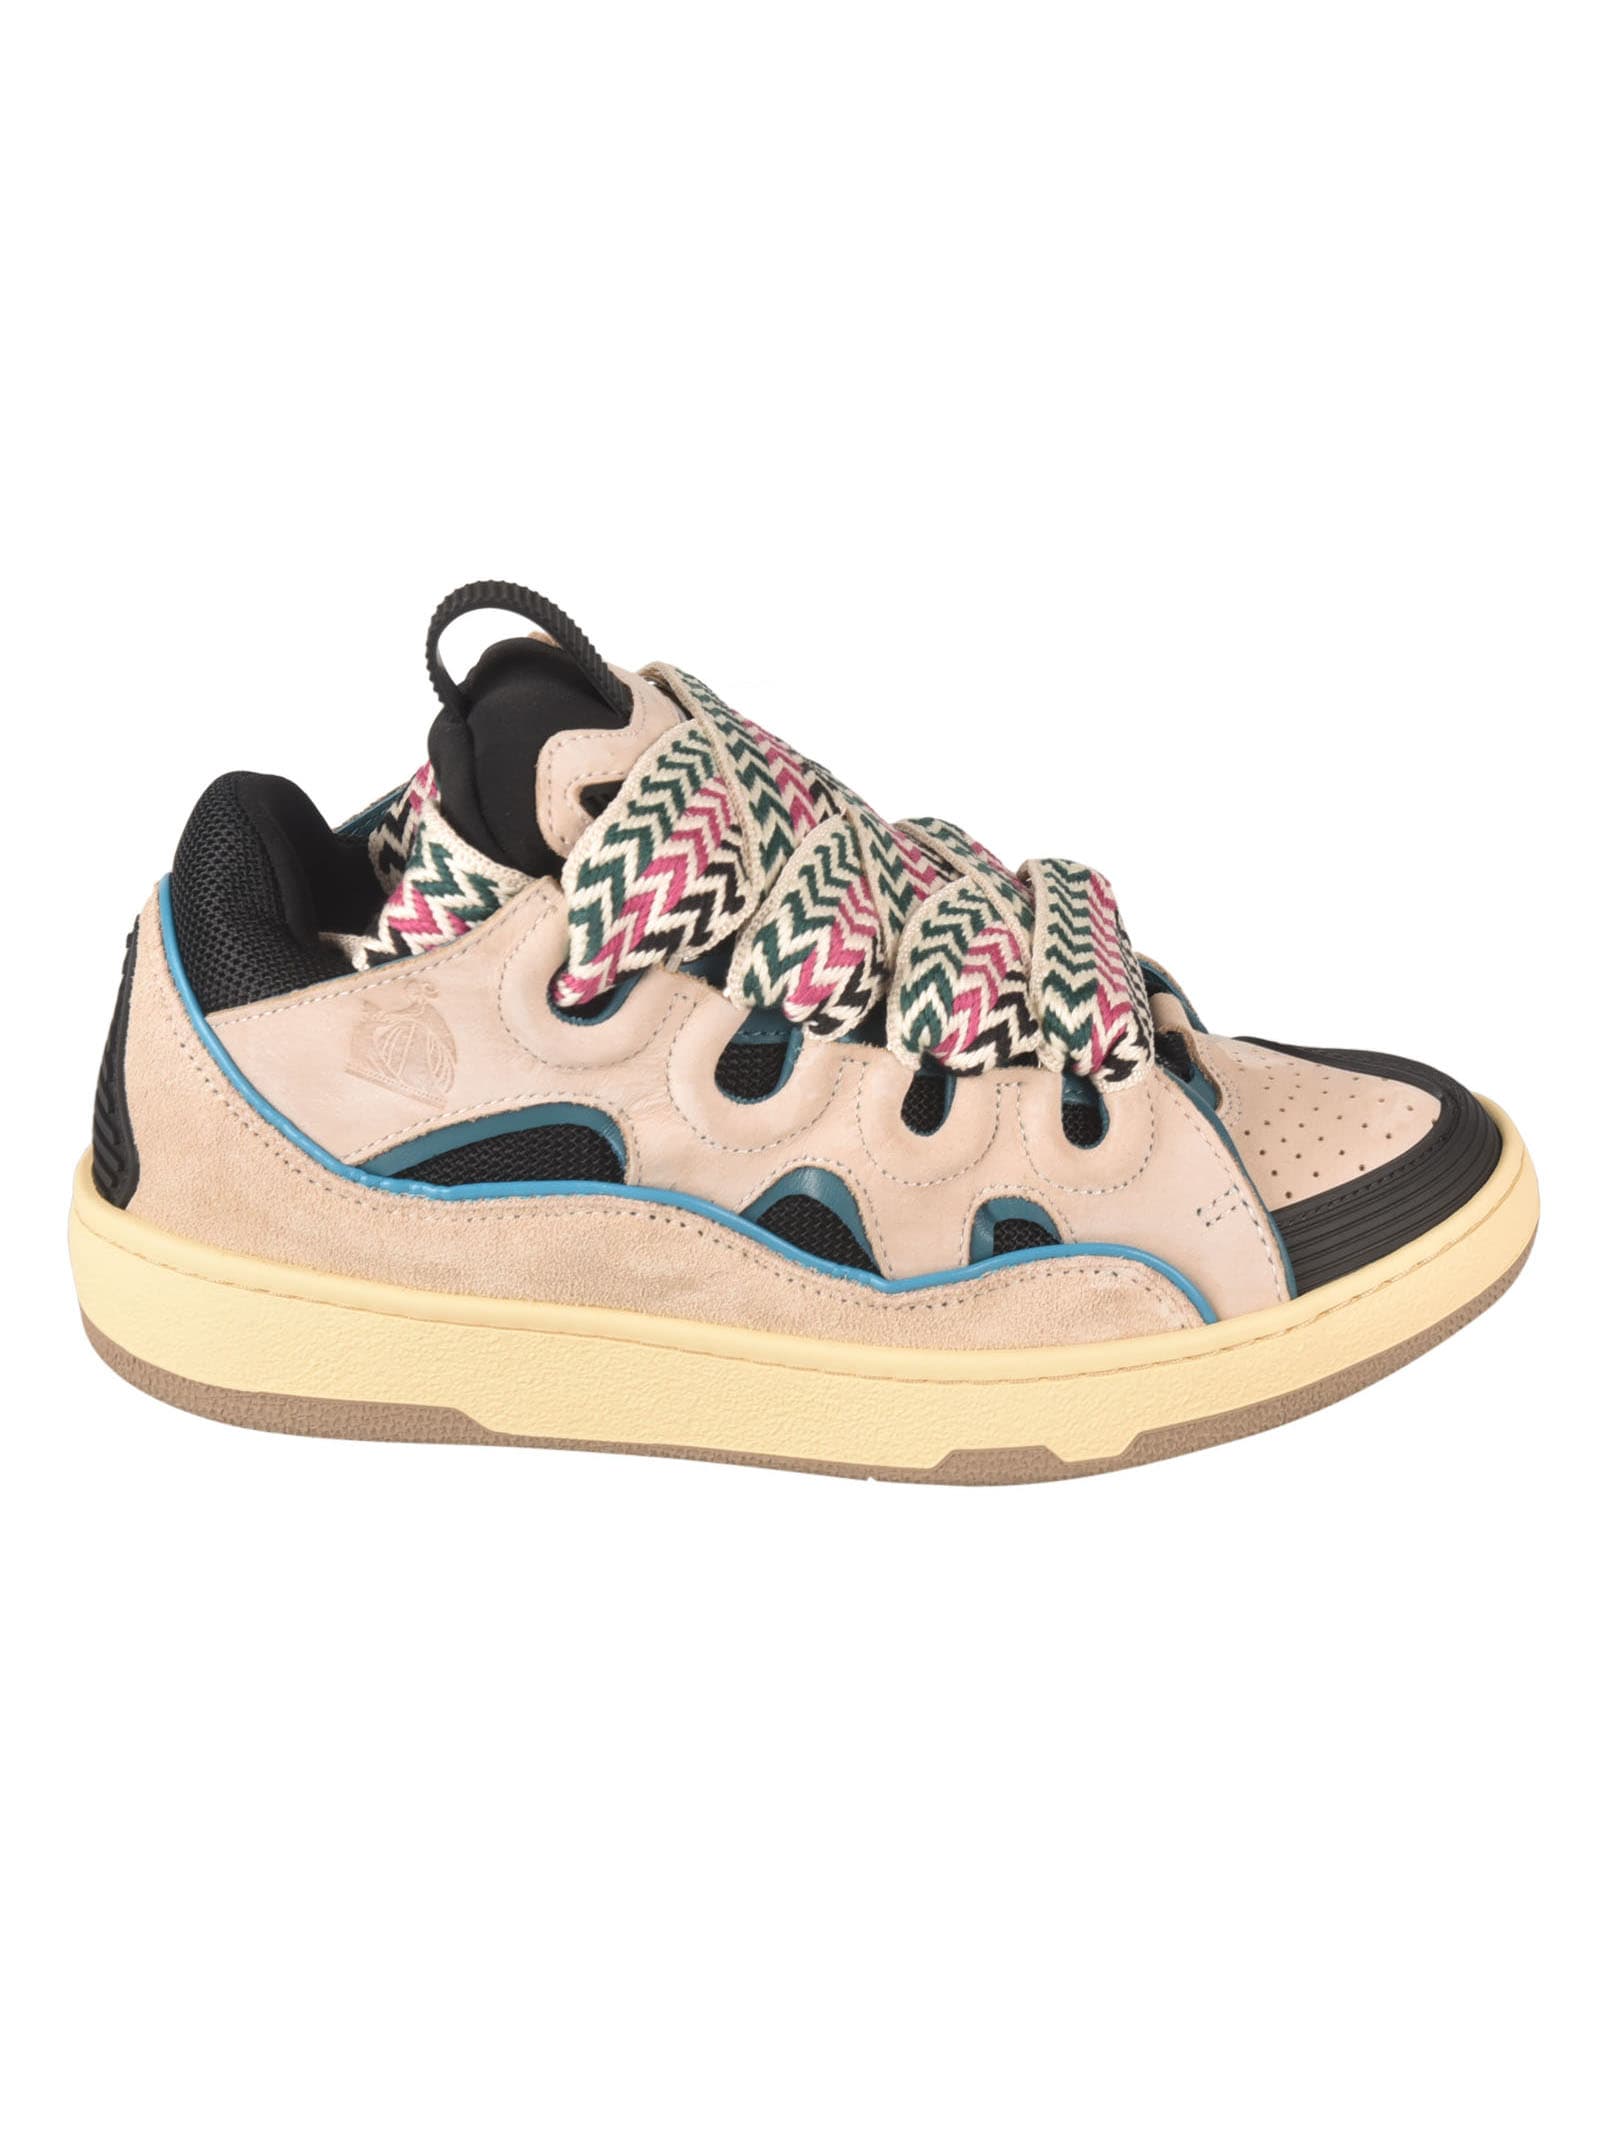 Lanvin Burgundy & Pink Suede Bumpr Sneakers | Smart Closet